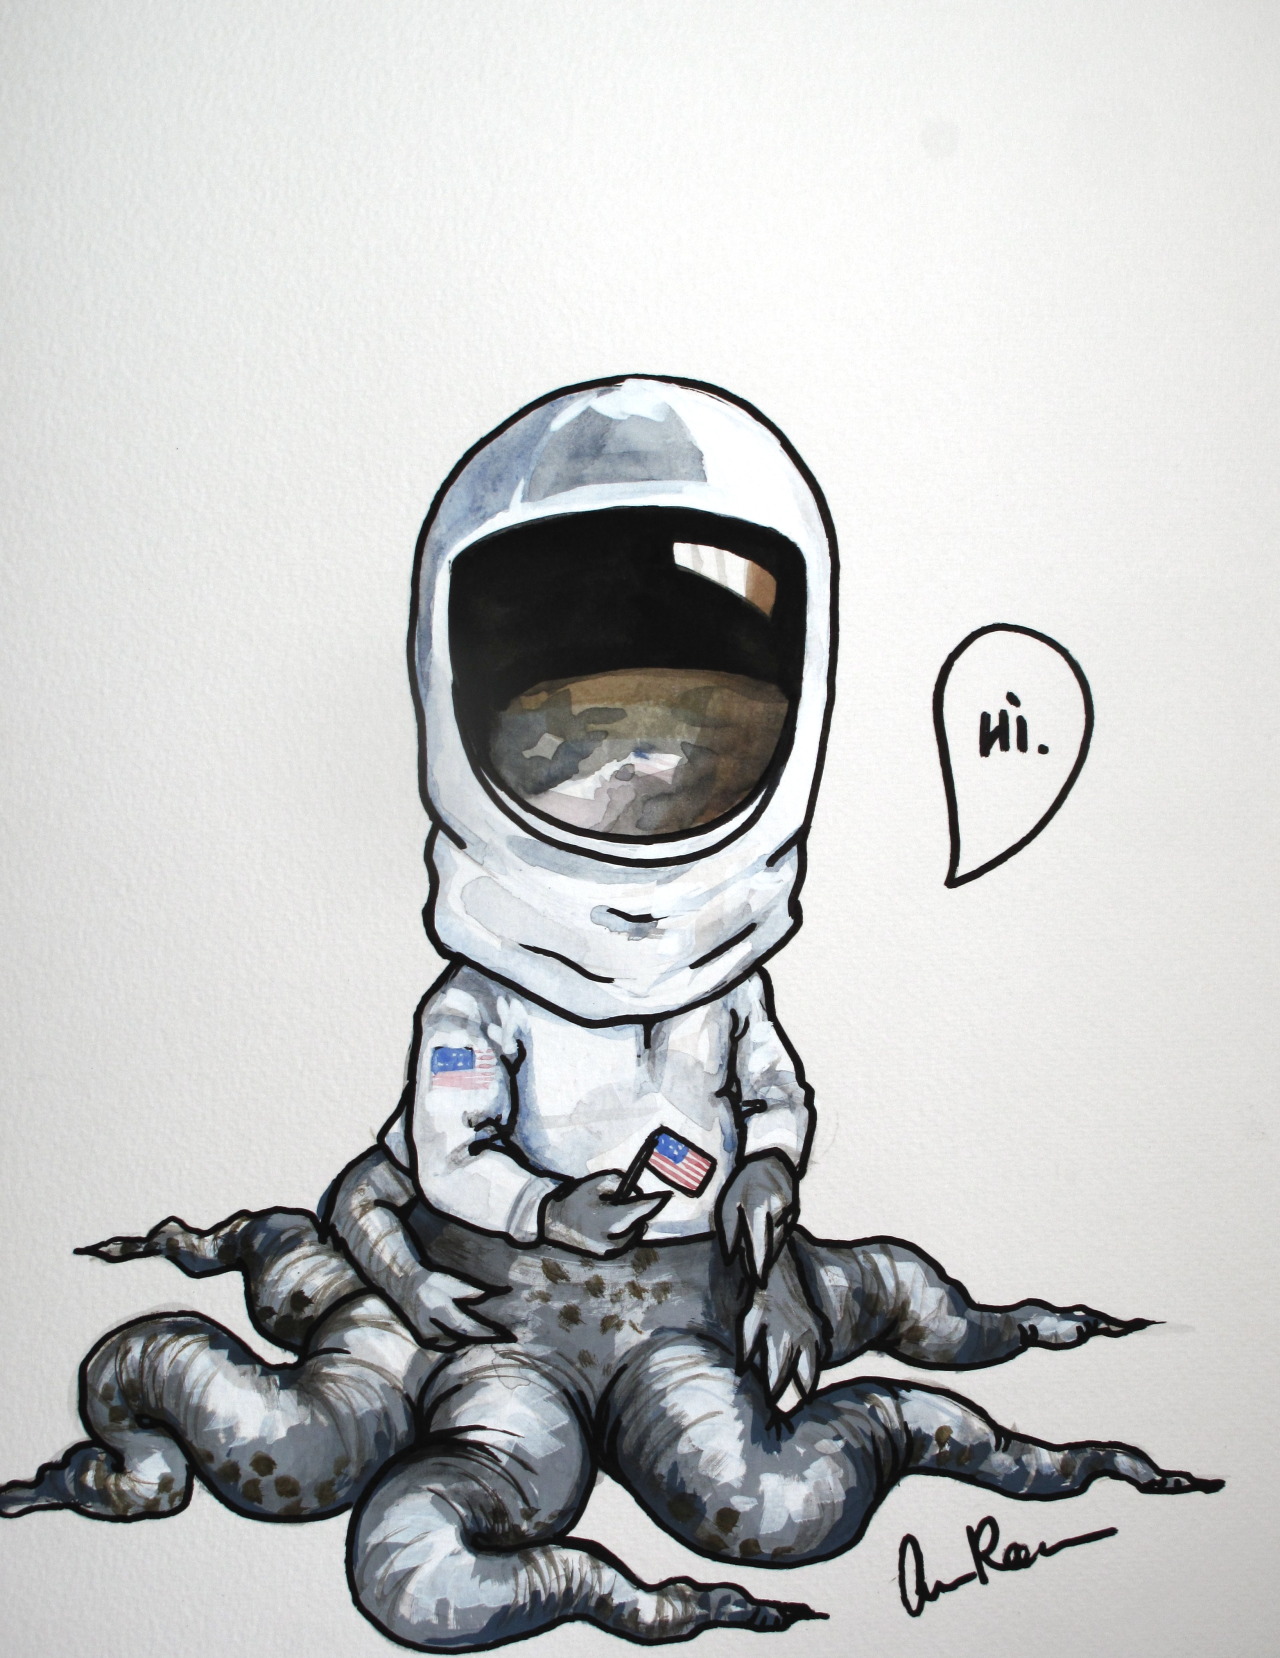 Alien Astronaut anneroemer.tumblr.com